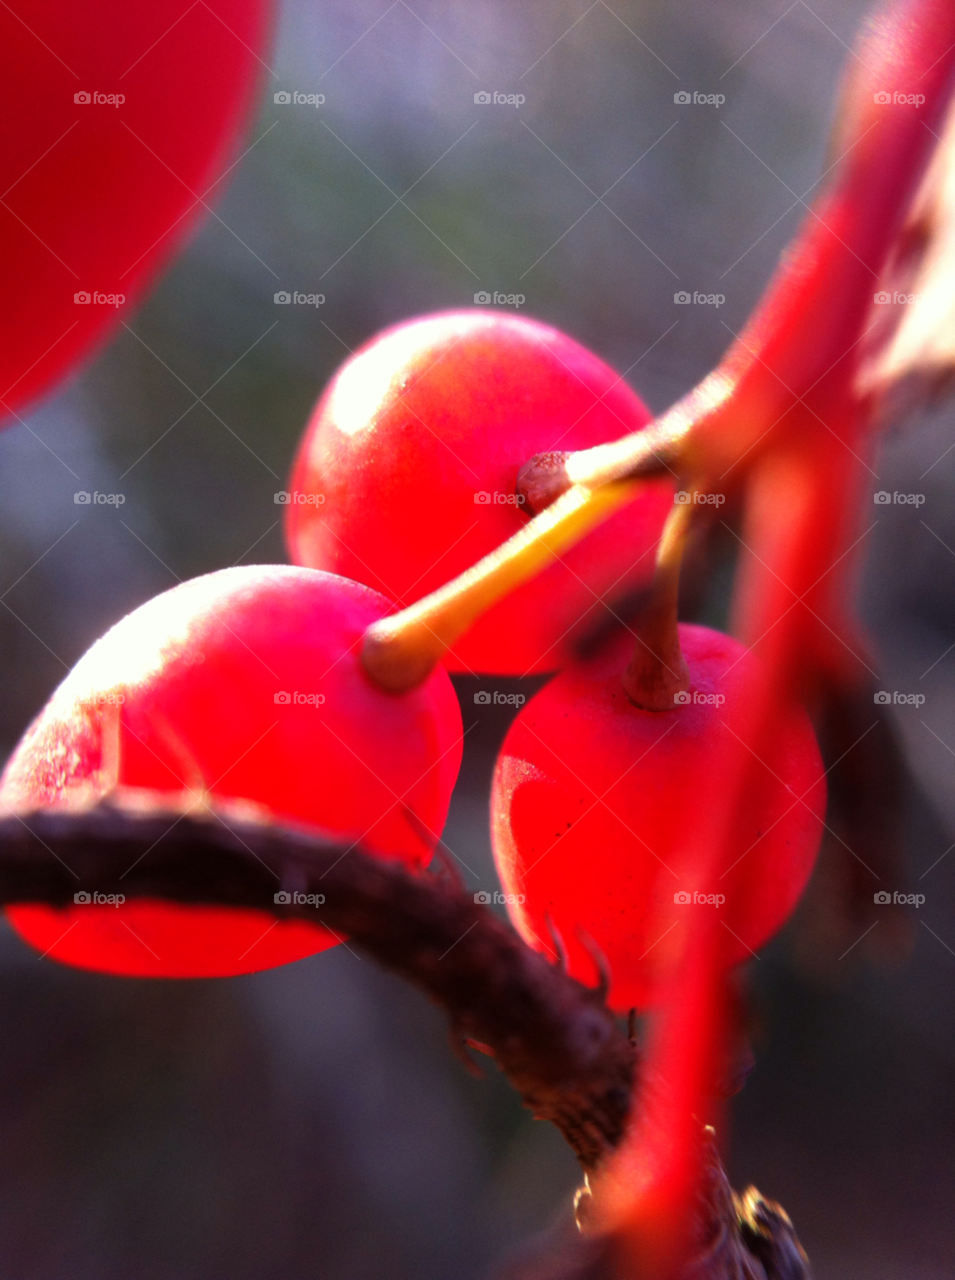 winter macro red berries by s7vyb